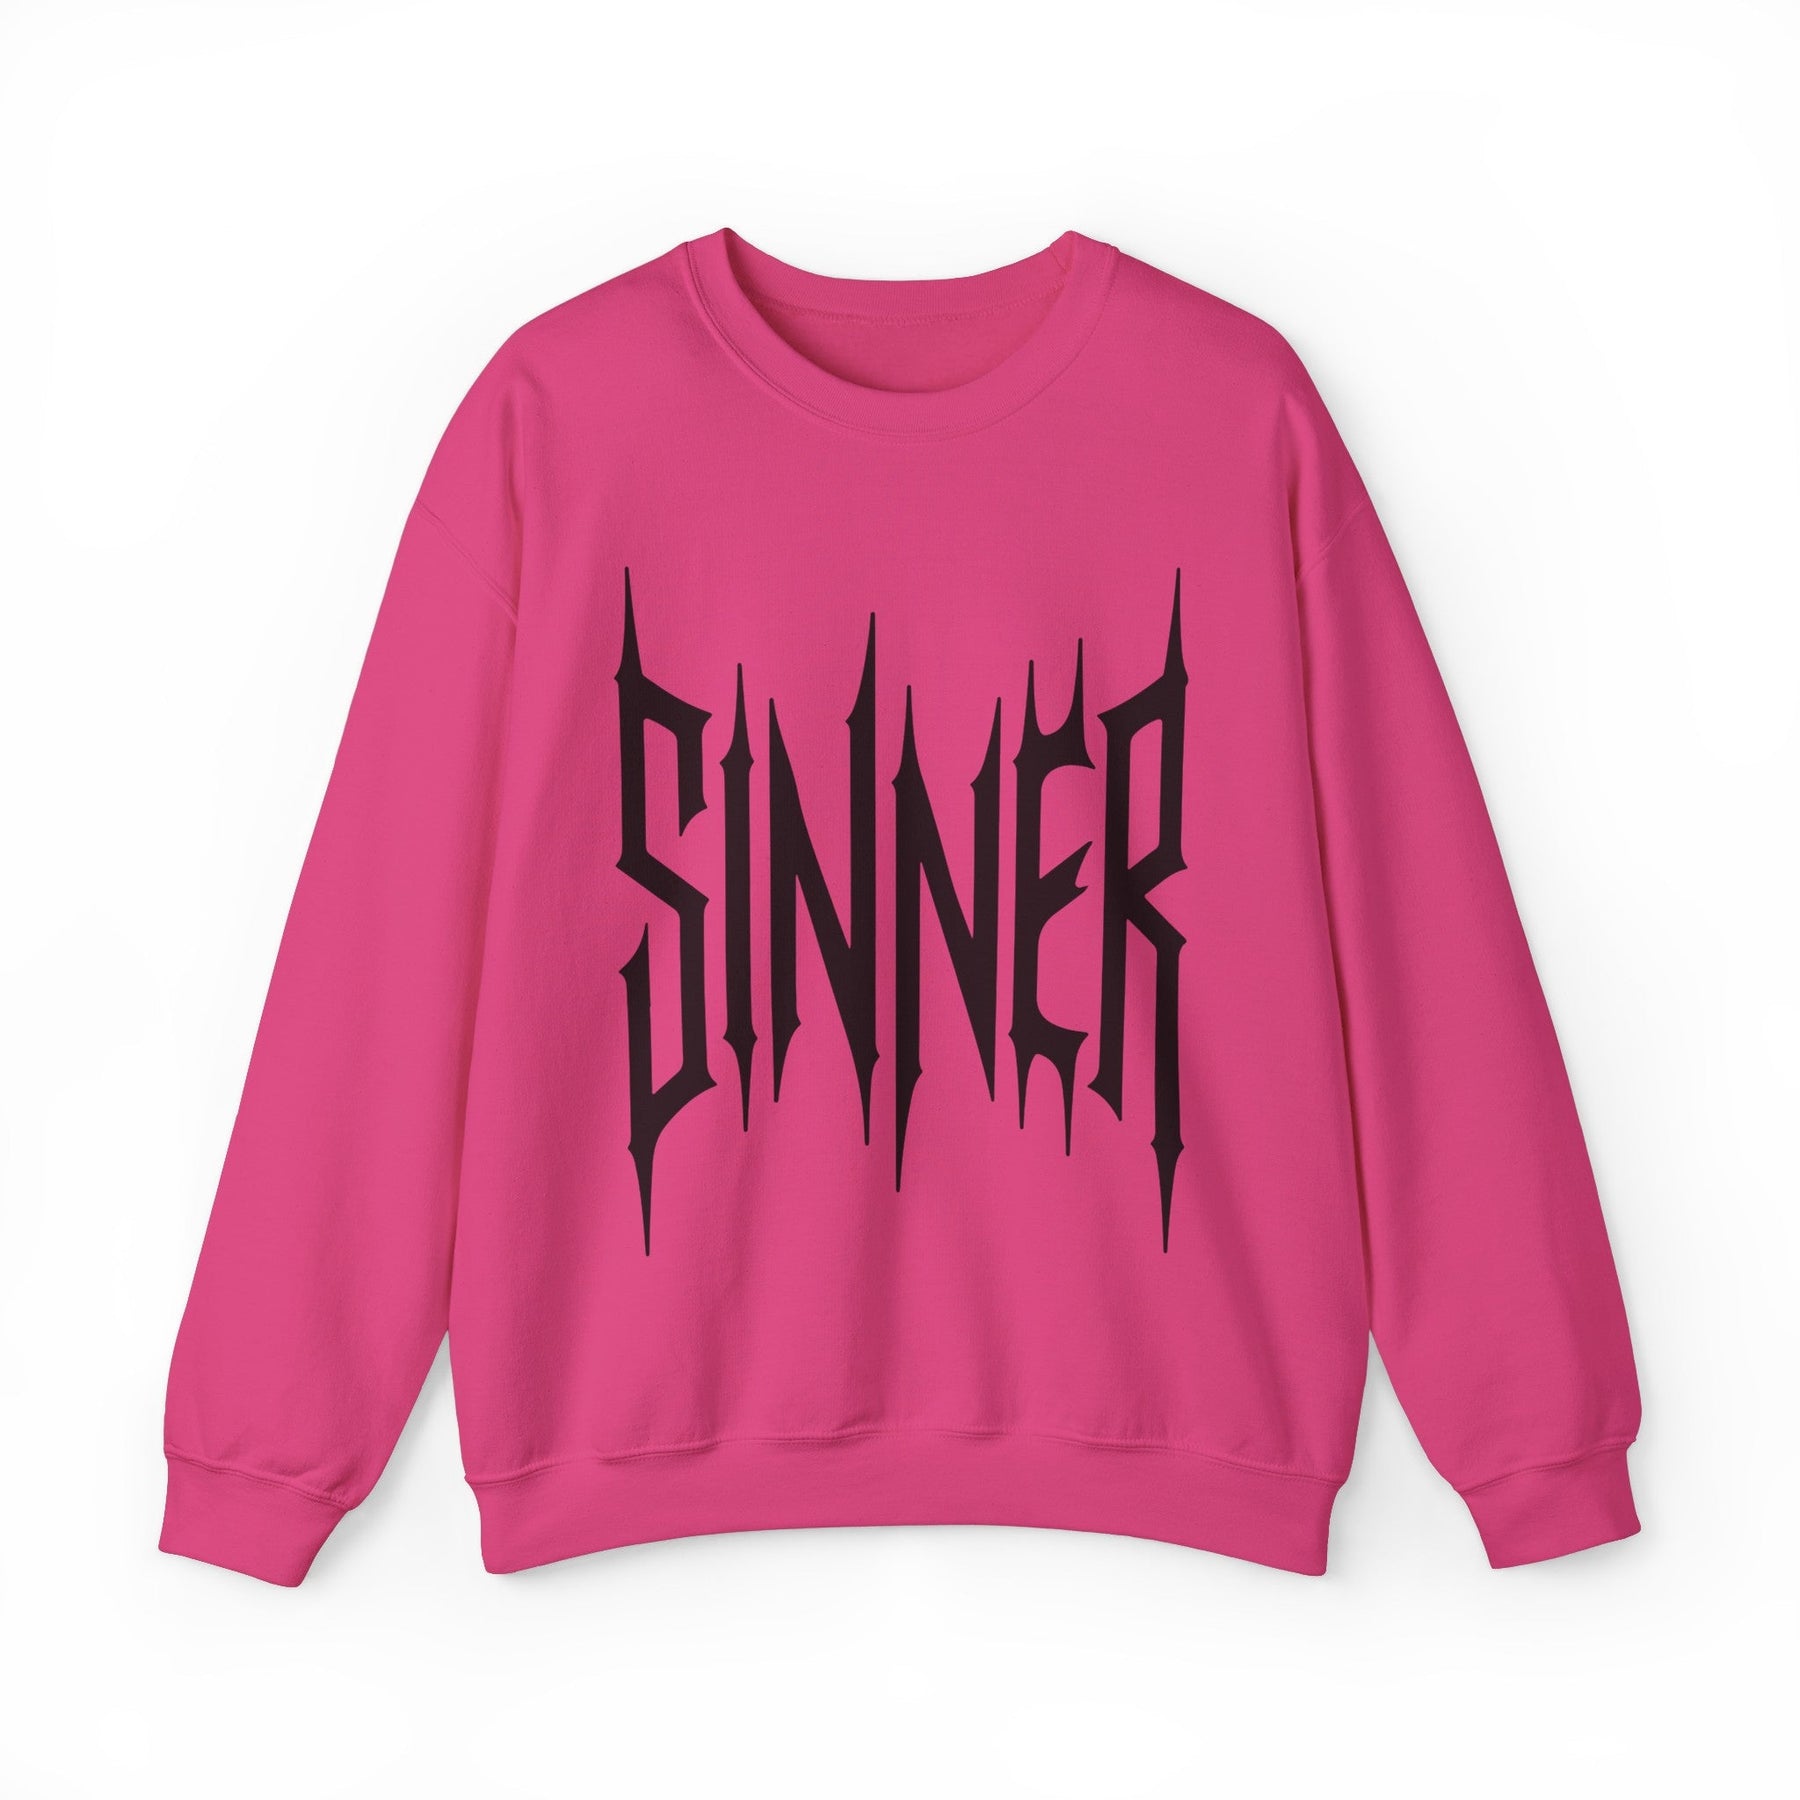 Sinner Unisex Sweatshirt - Goth Cloth Co.Sweatshirt90037341727330241704